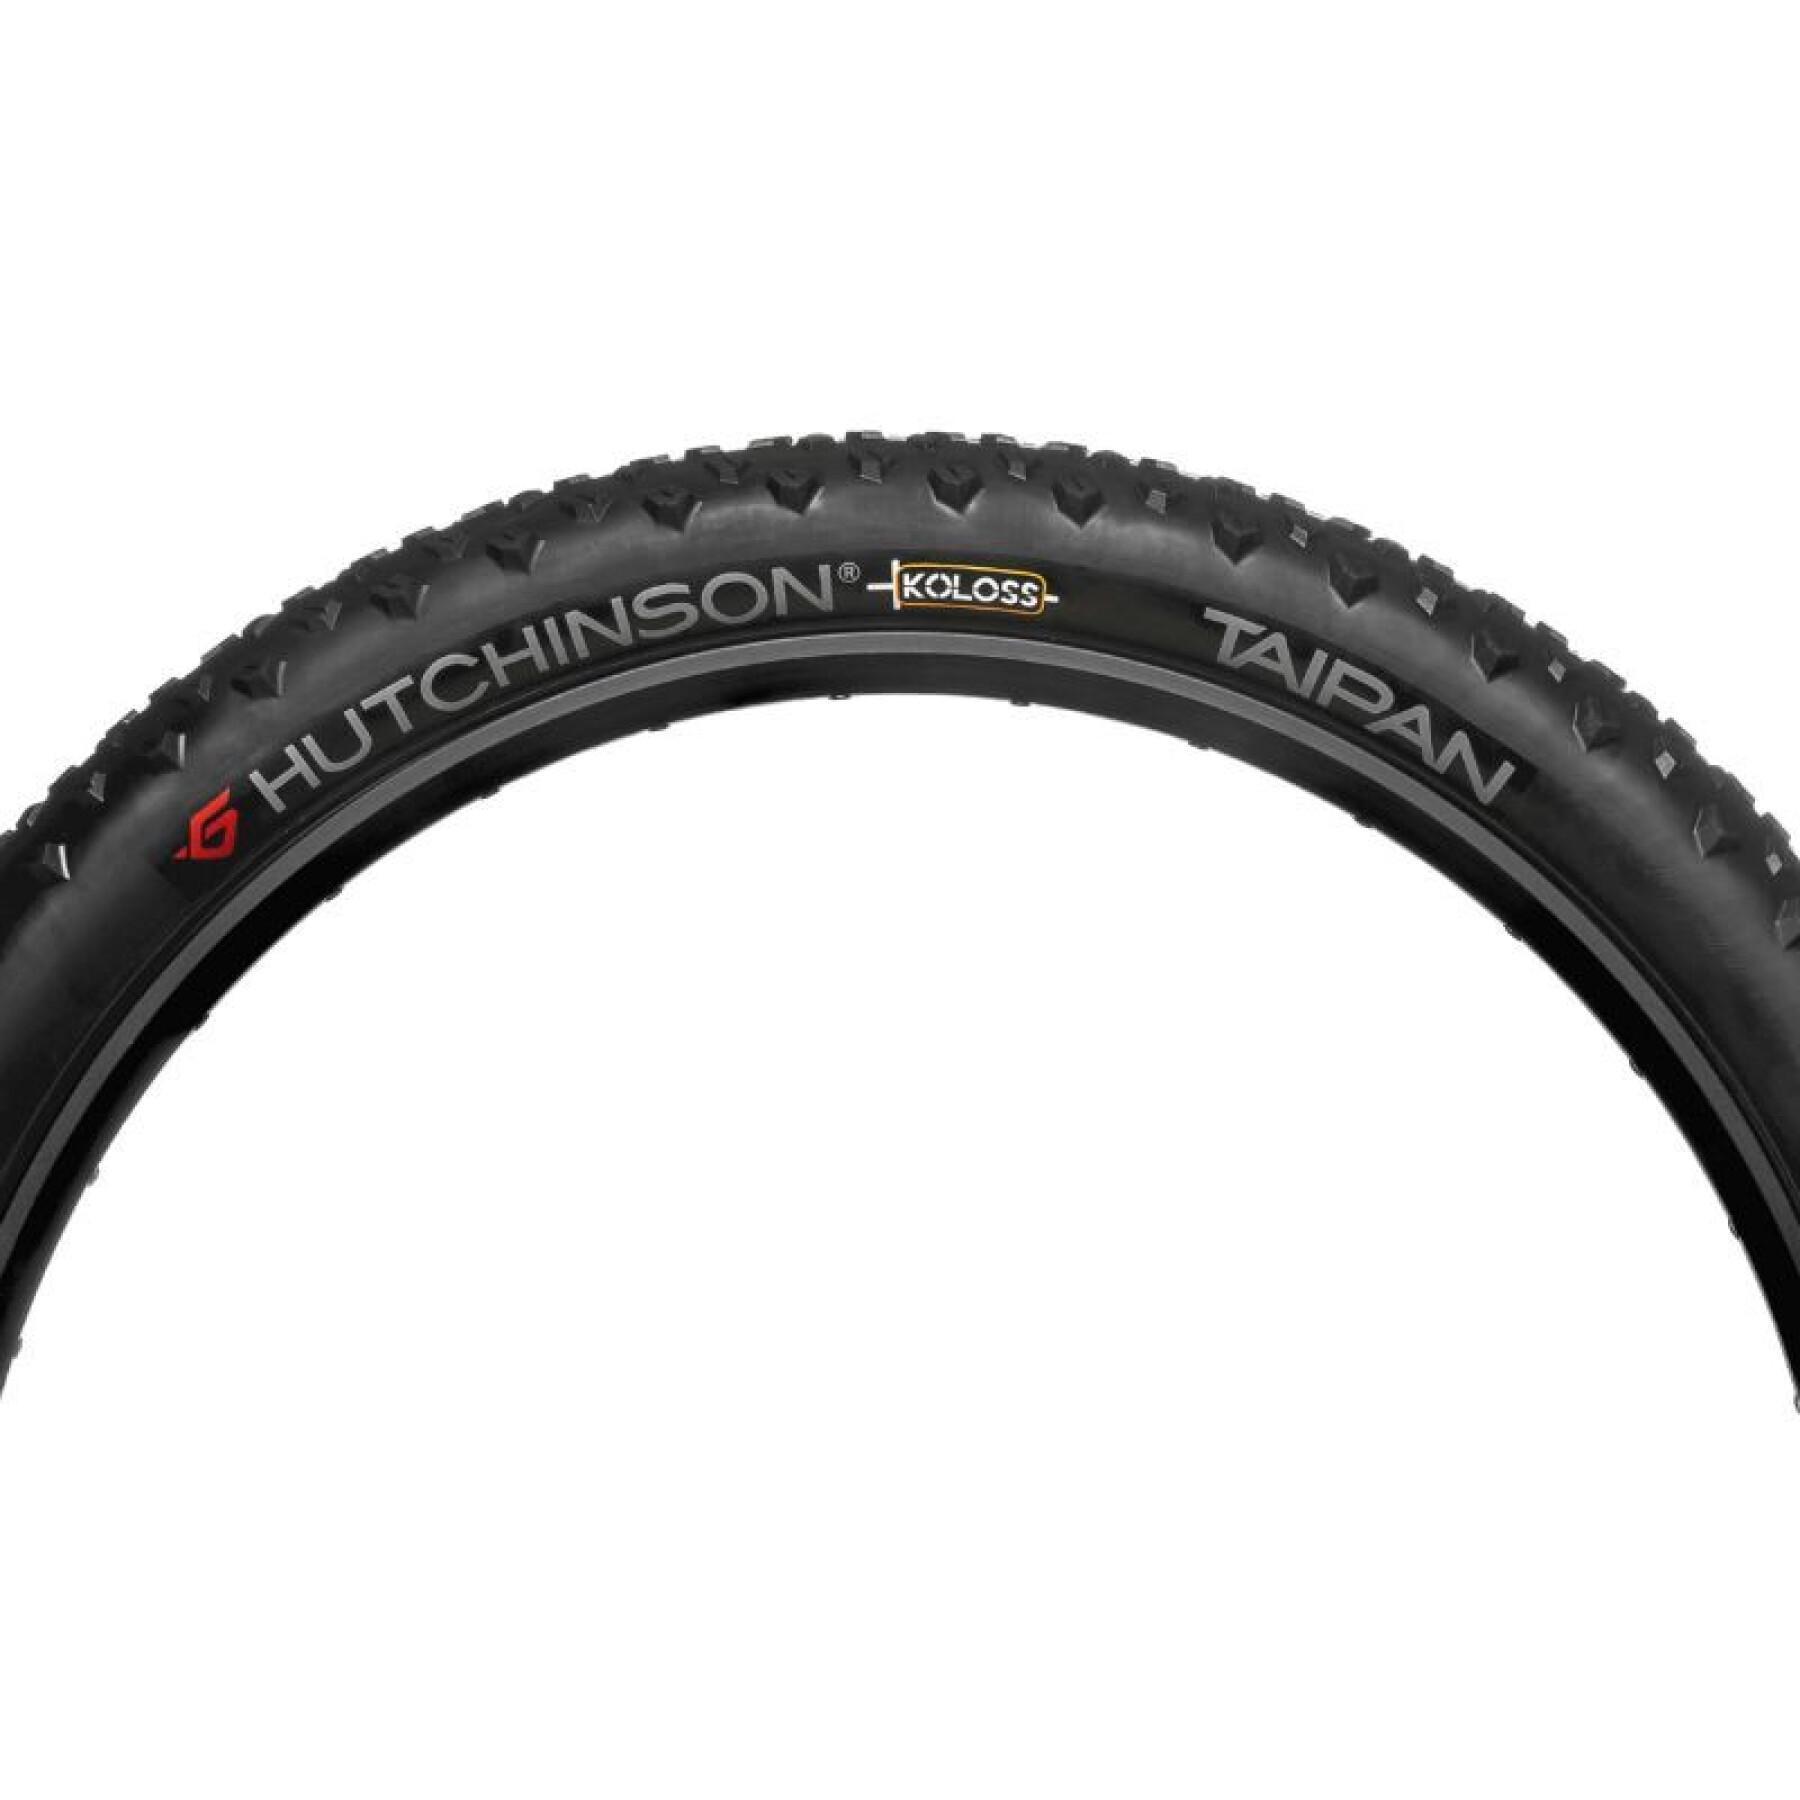 Gravidade dos pneus de bicicleta de montanha - aprovado Hutchinson taipan koloss TR E50